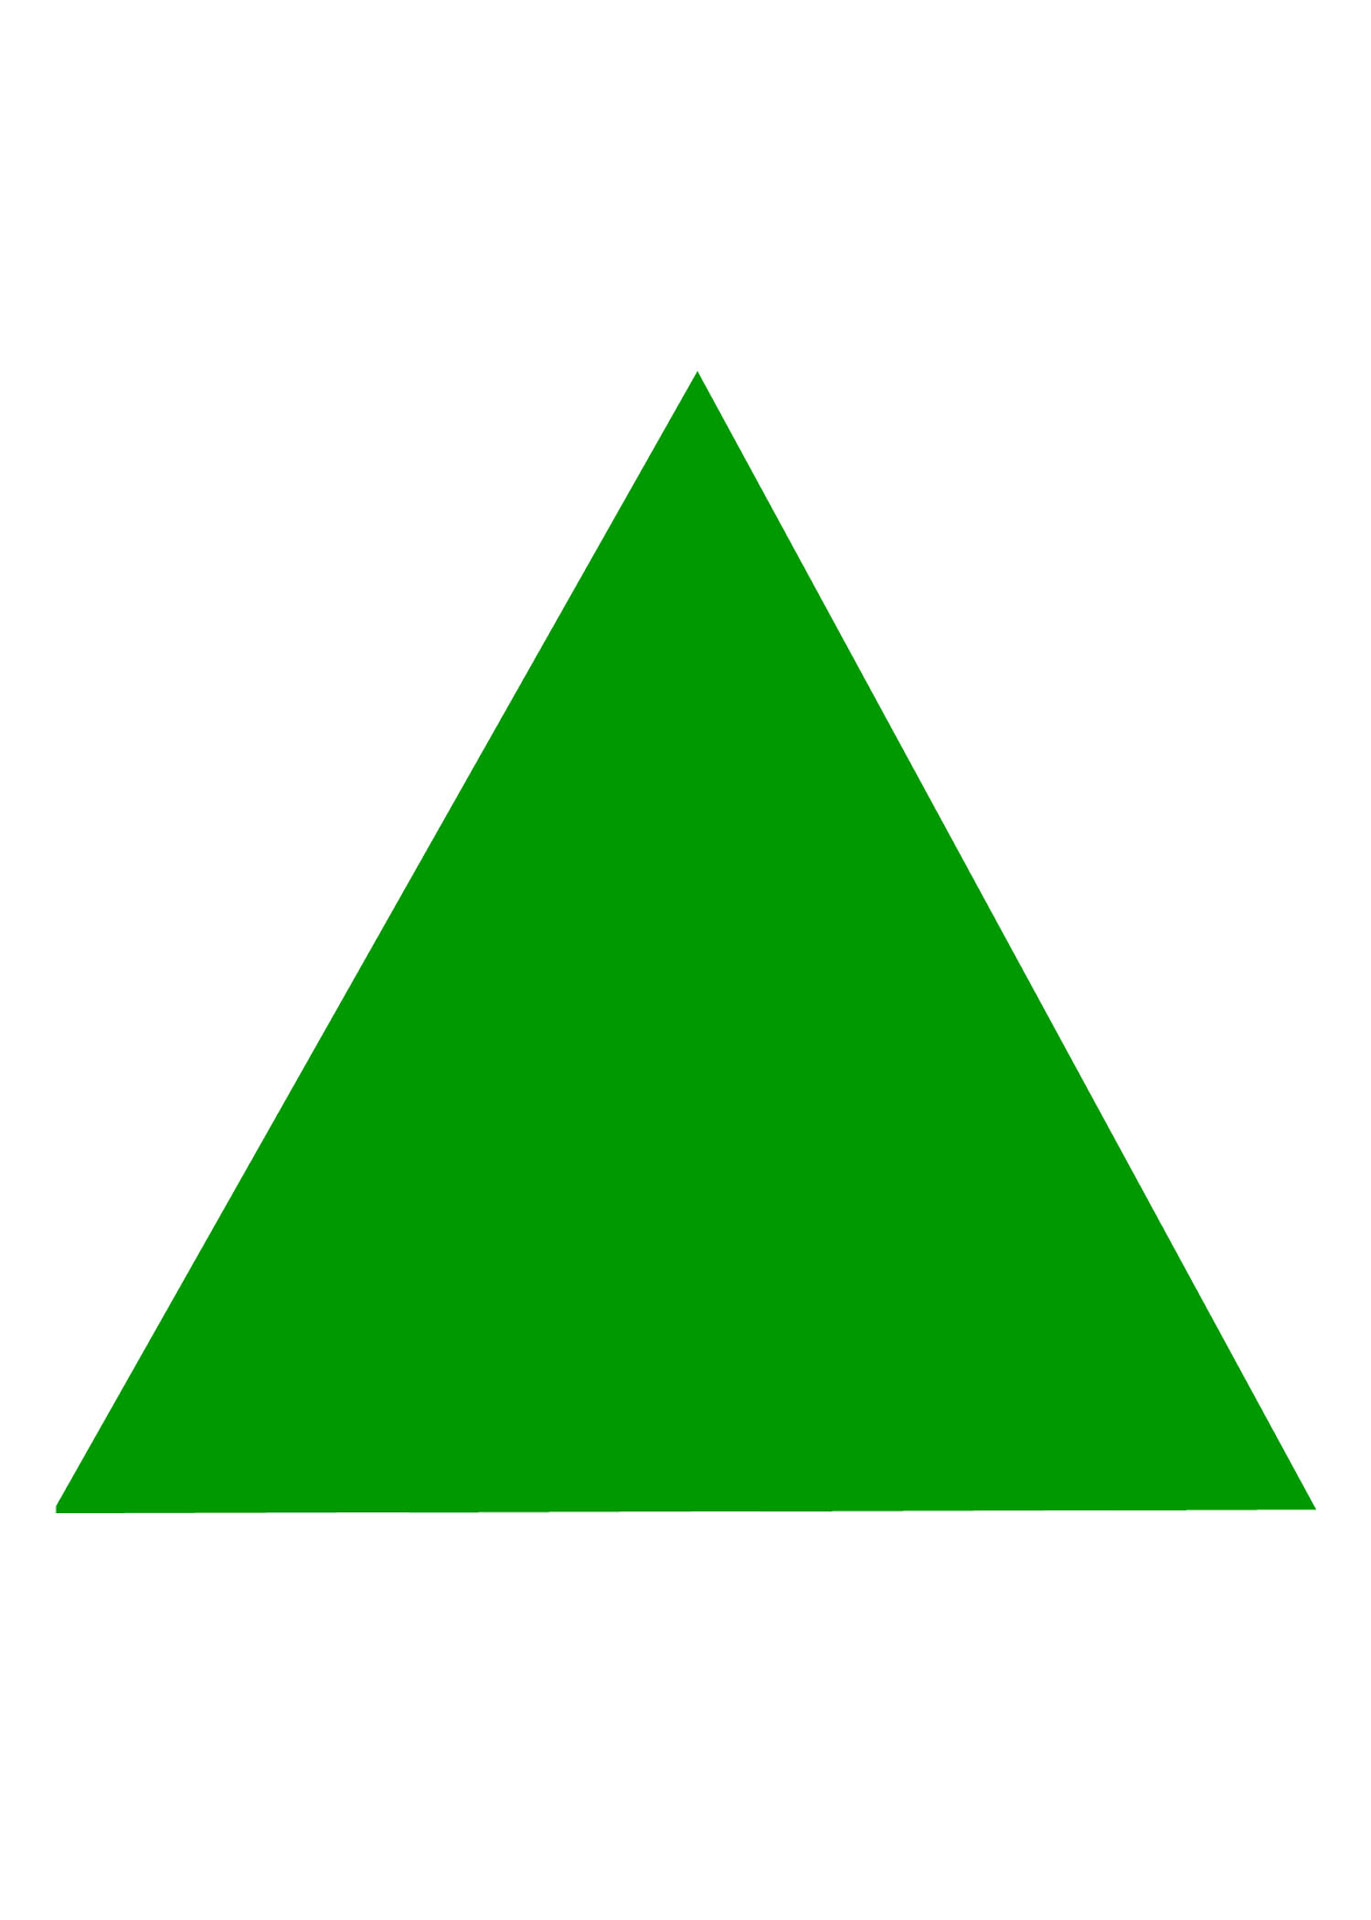 basic-triangle-shape-free-stock-photo-public-domain-pictures